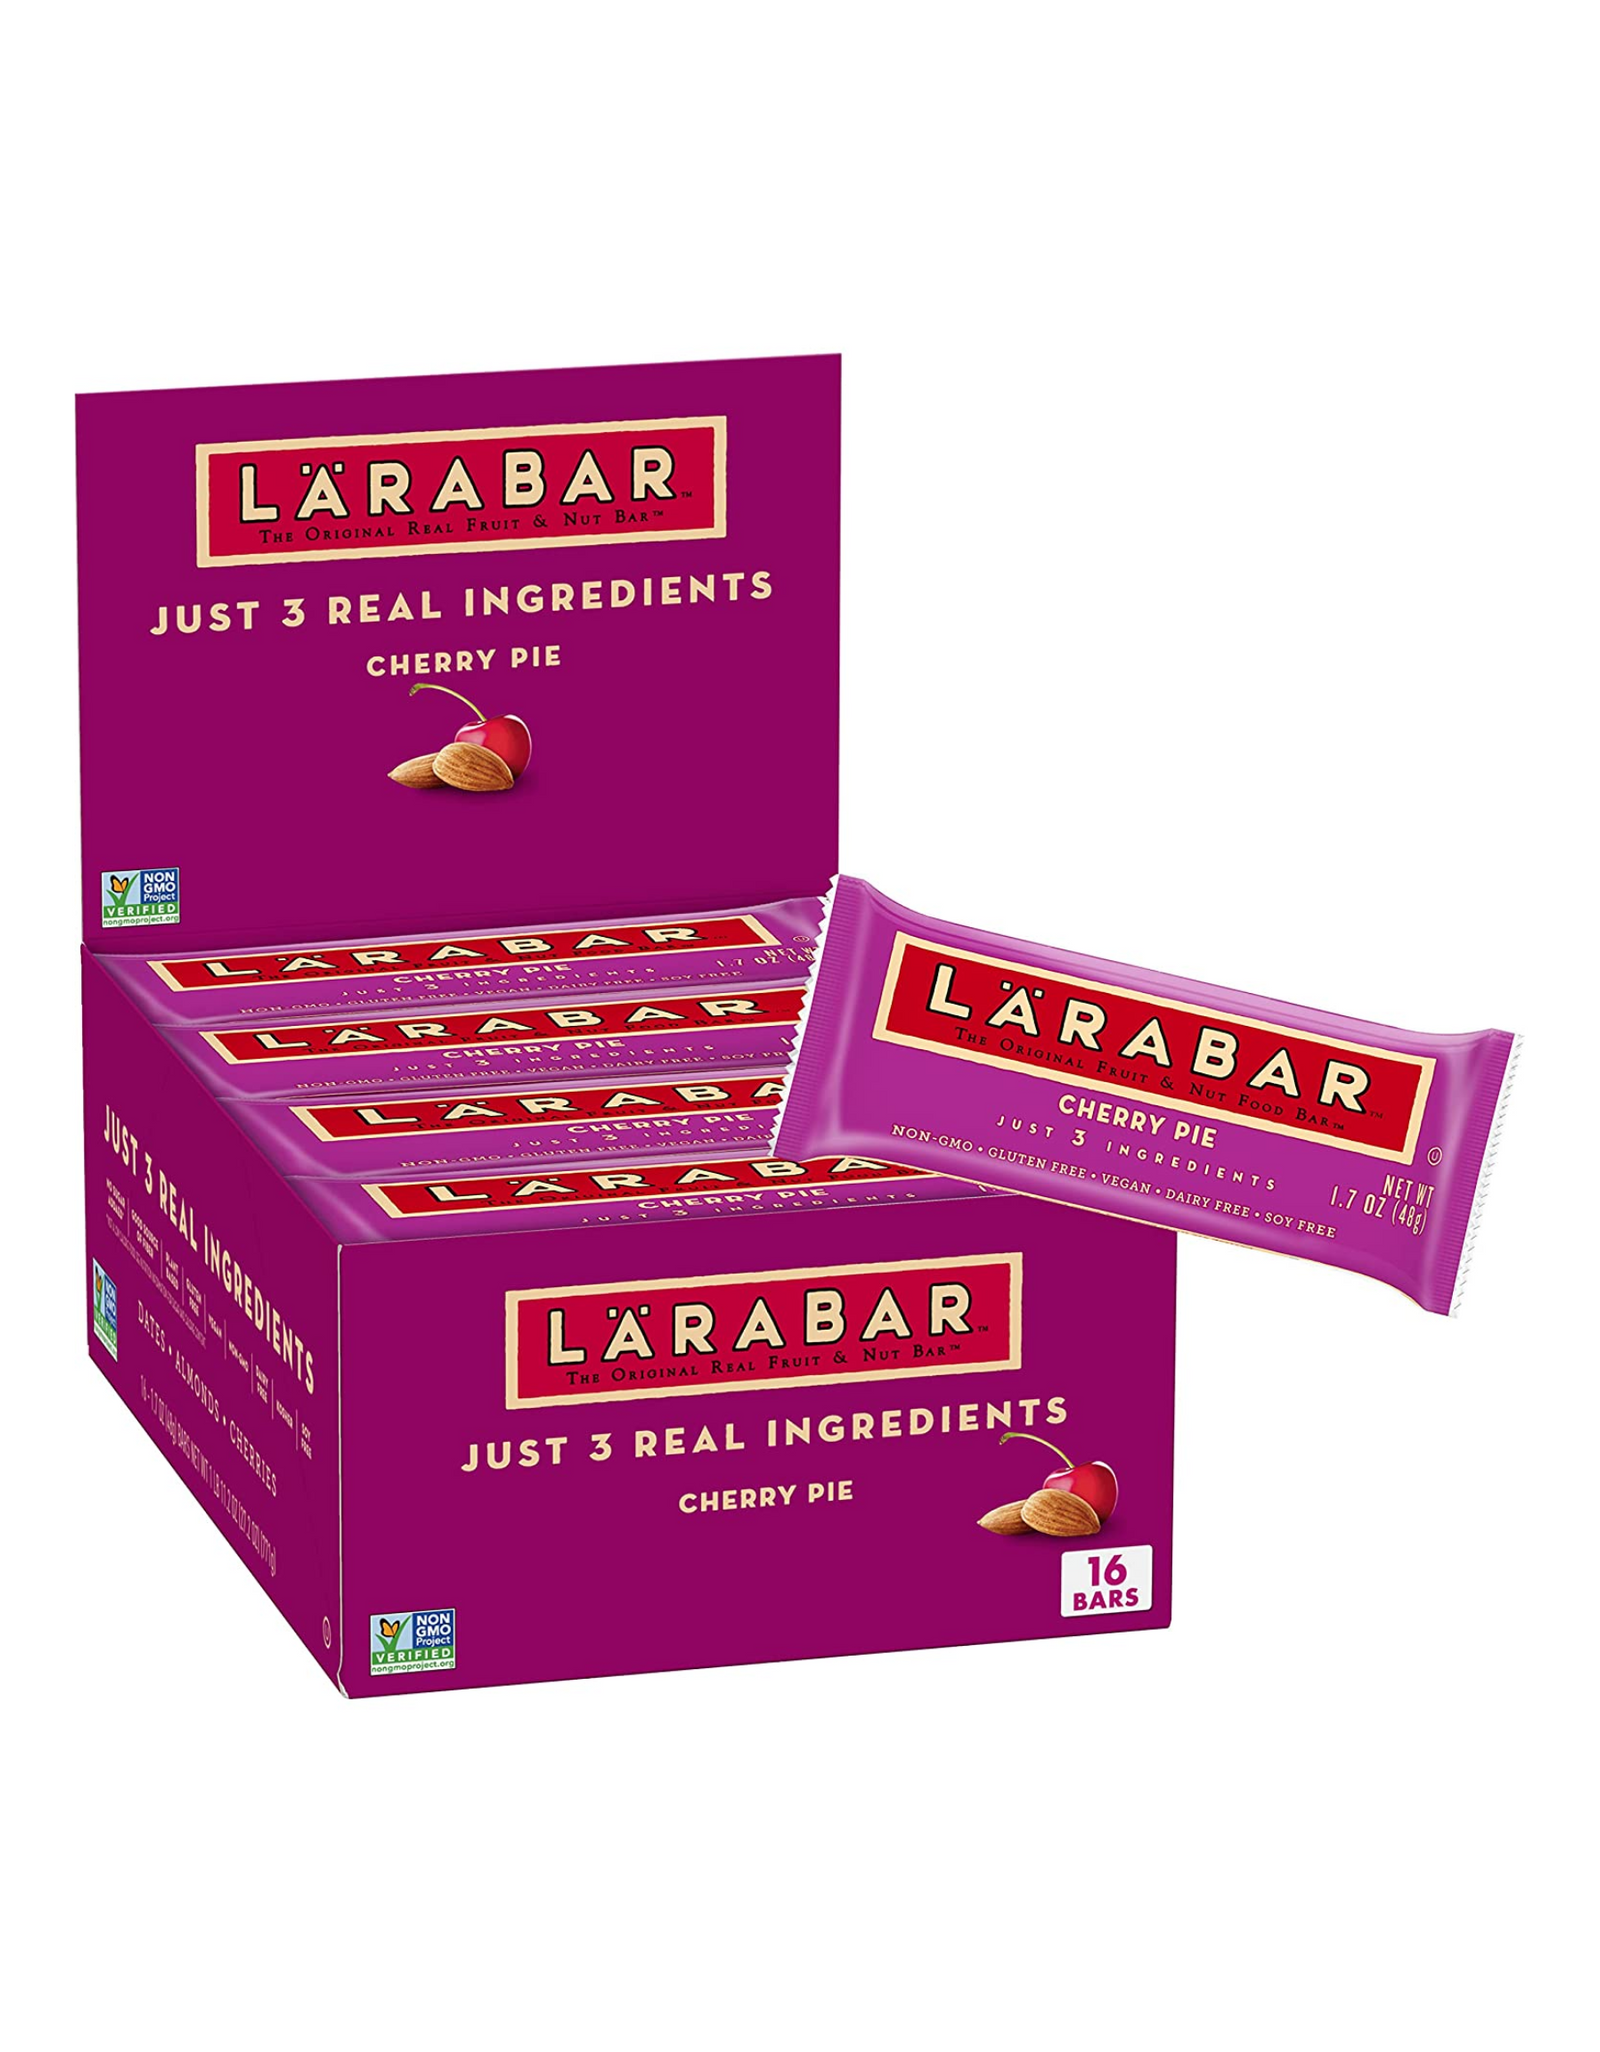 Larabar Cherry Pie, Gluten Free, Original Real Fruit and Nut Bar, 1.7 oz, 16 Count